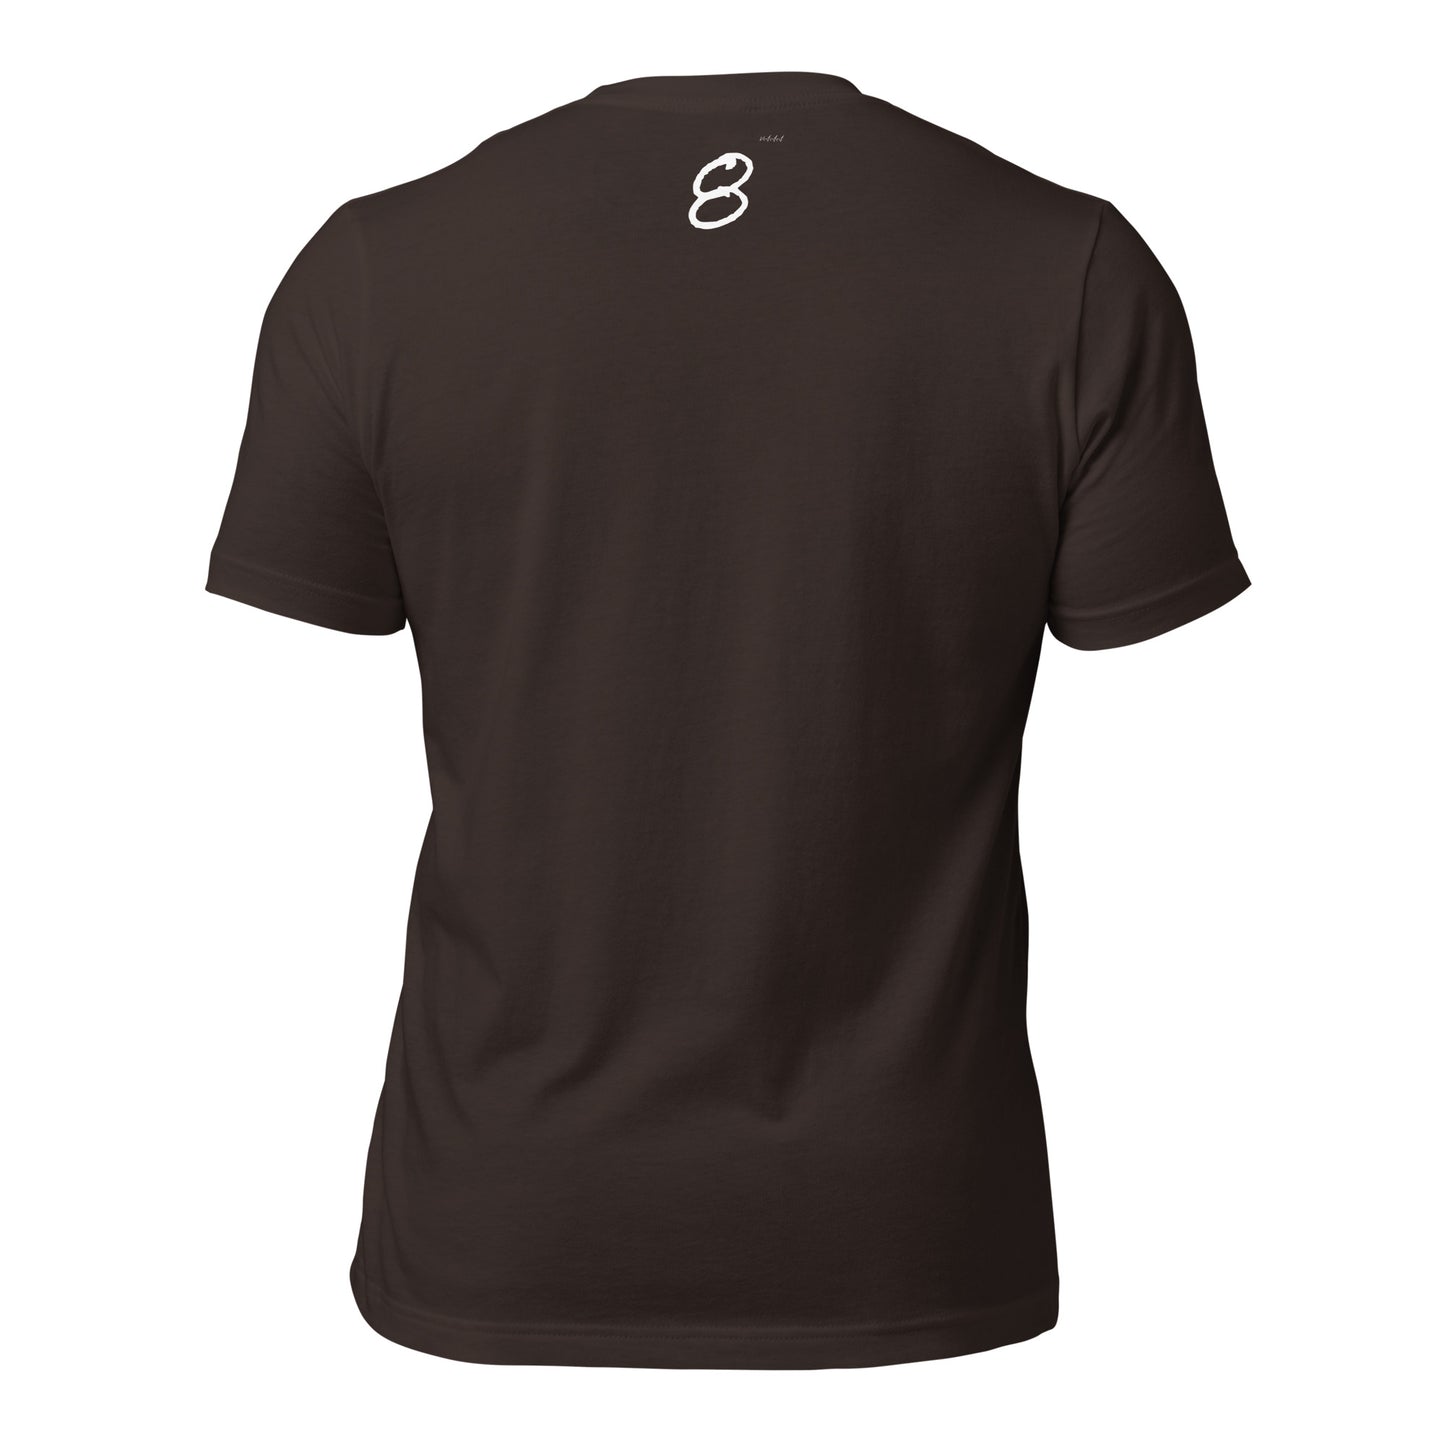 8 Numeral Unisex t-shirt